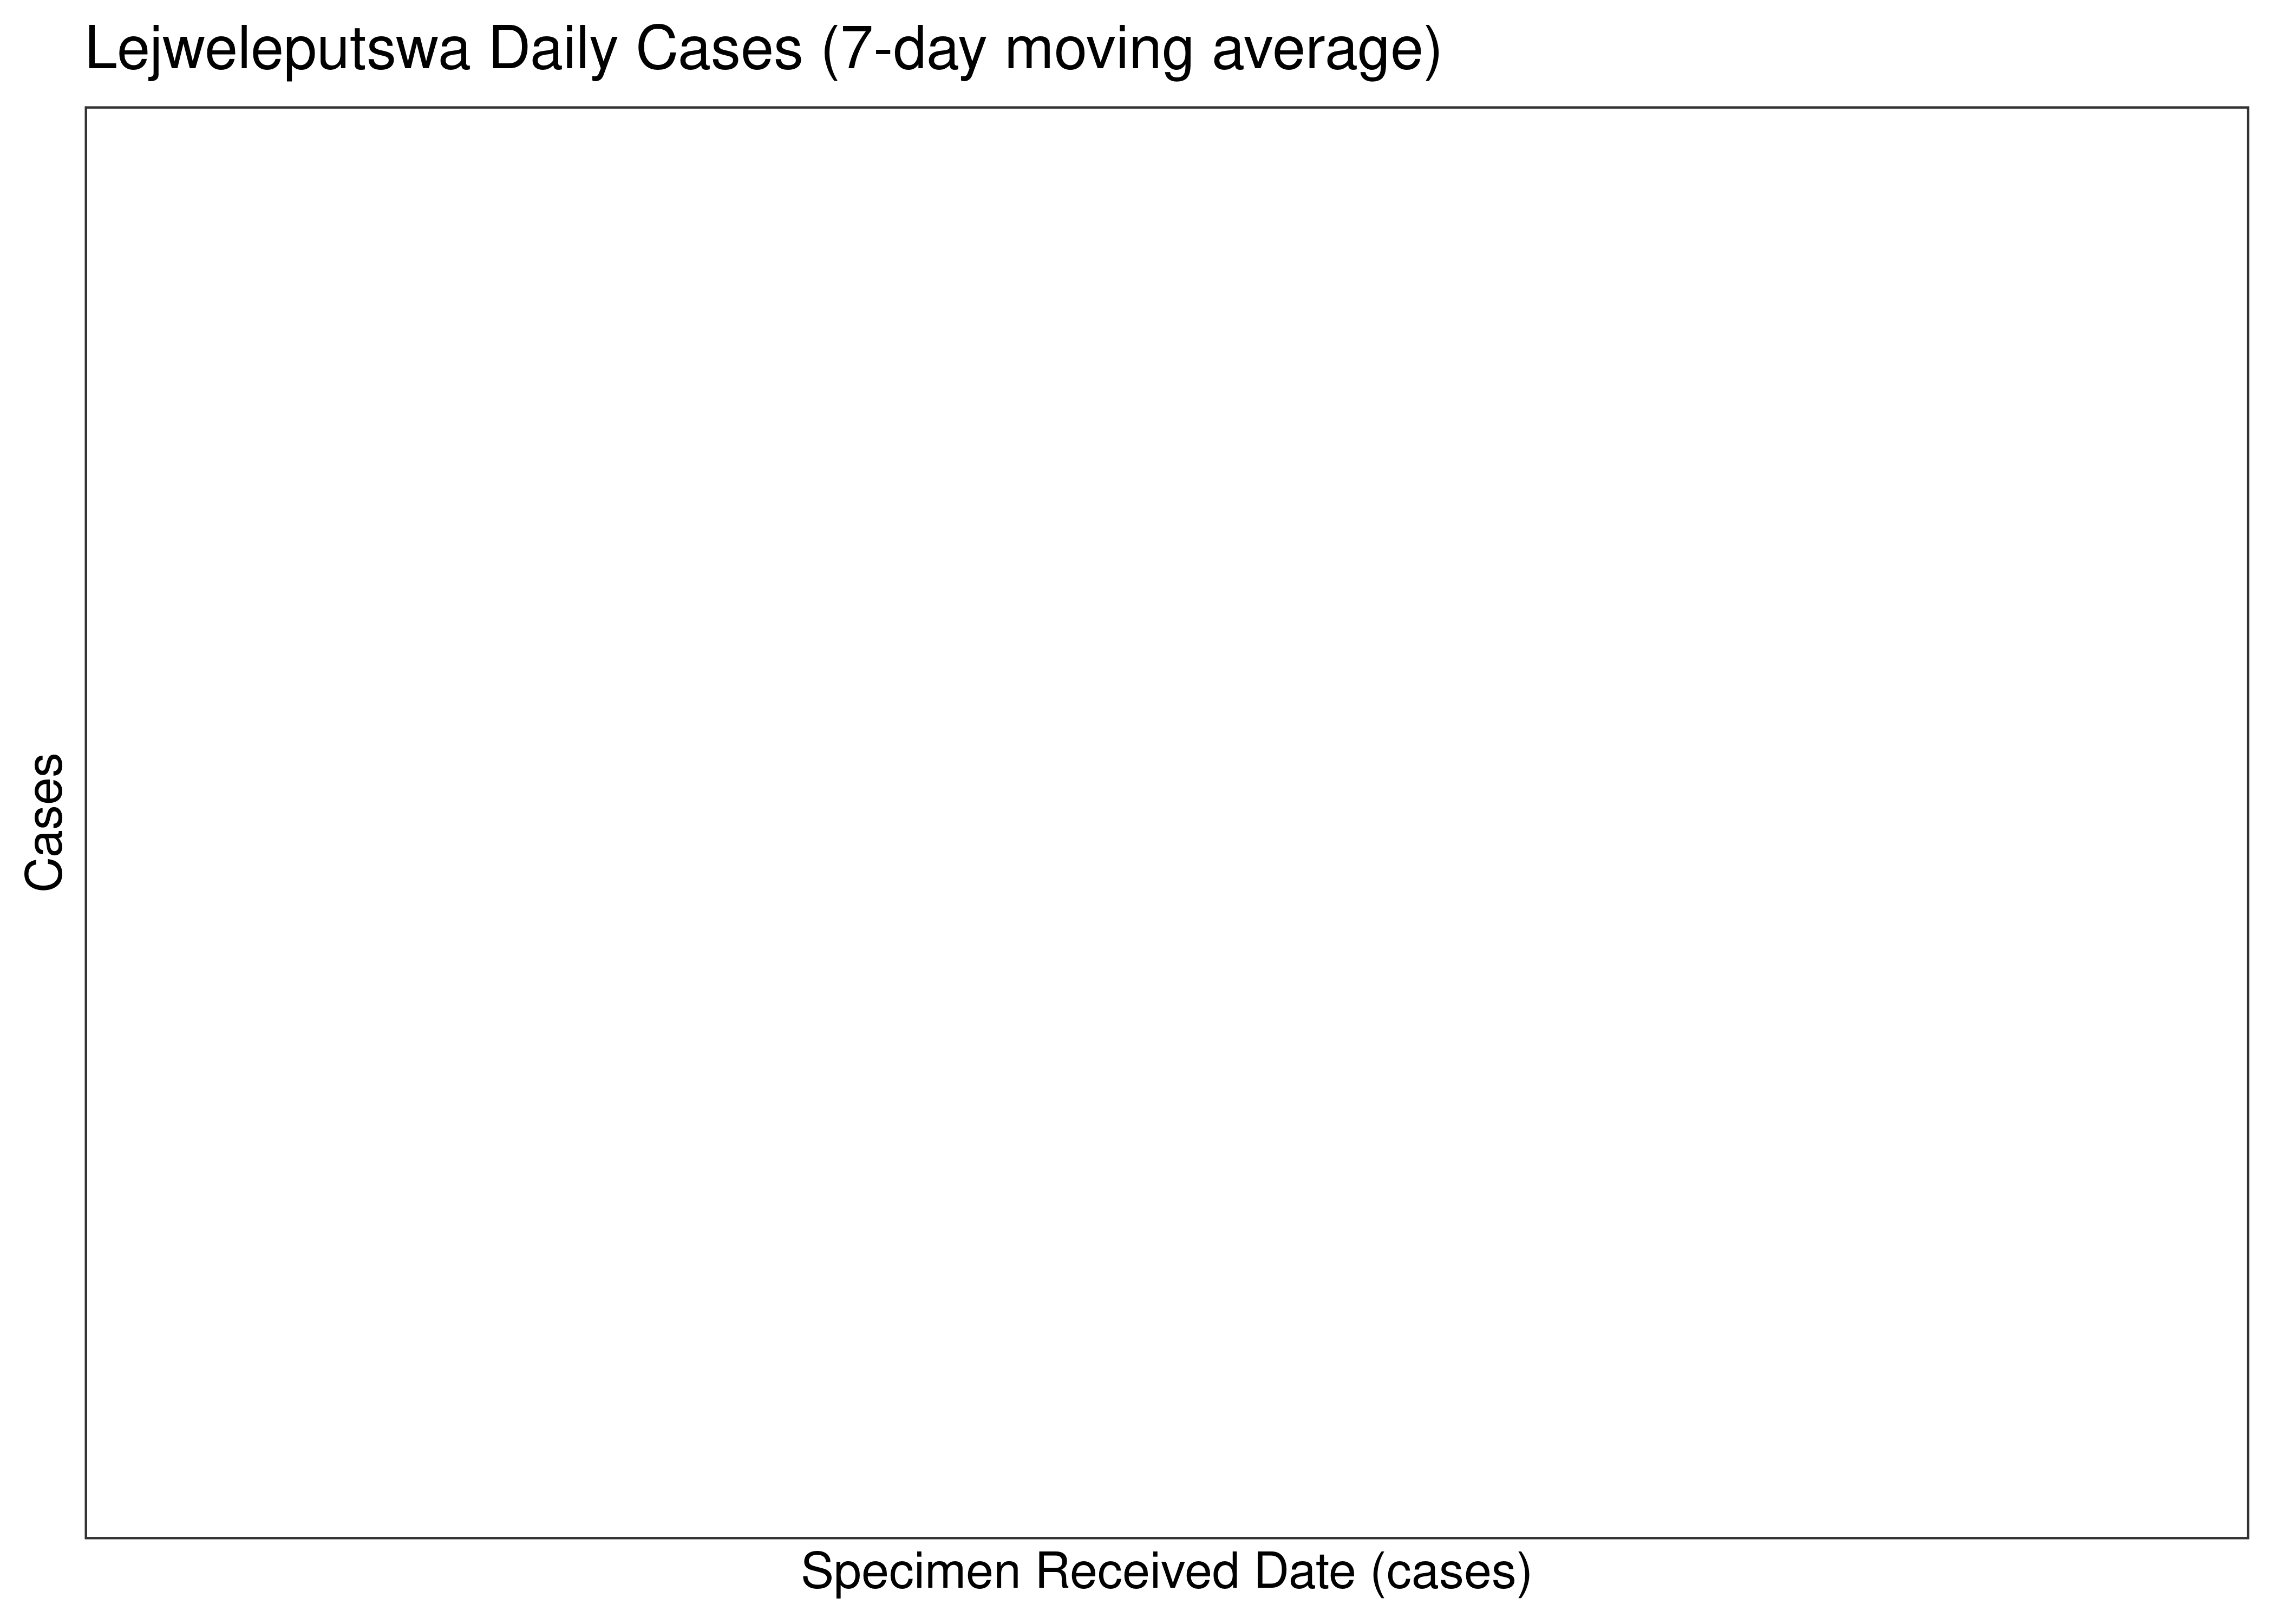 Lejweleputswa Daily Cases for Last 30-days (7-day moving average)